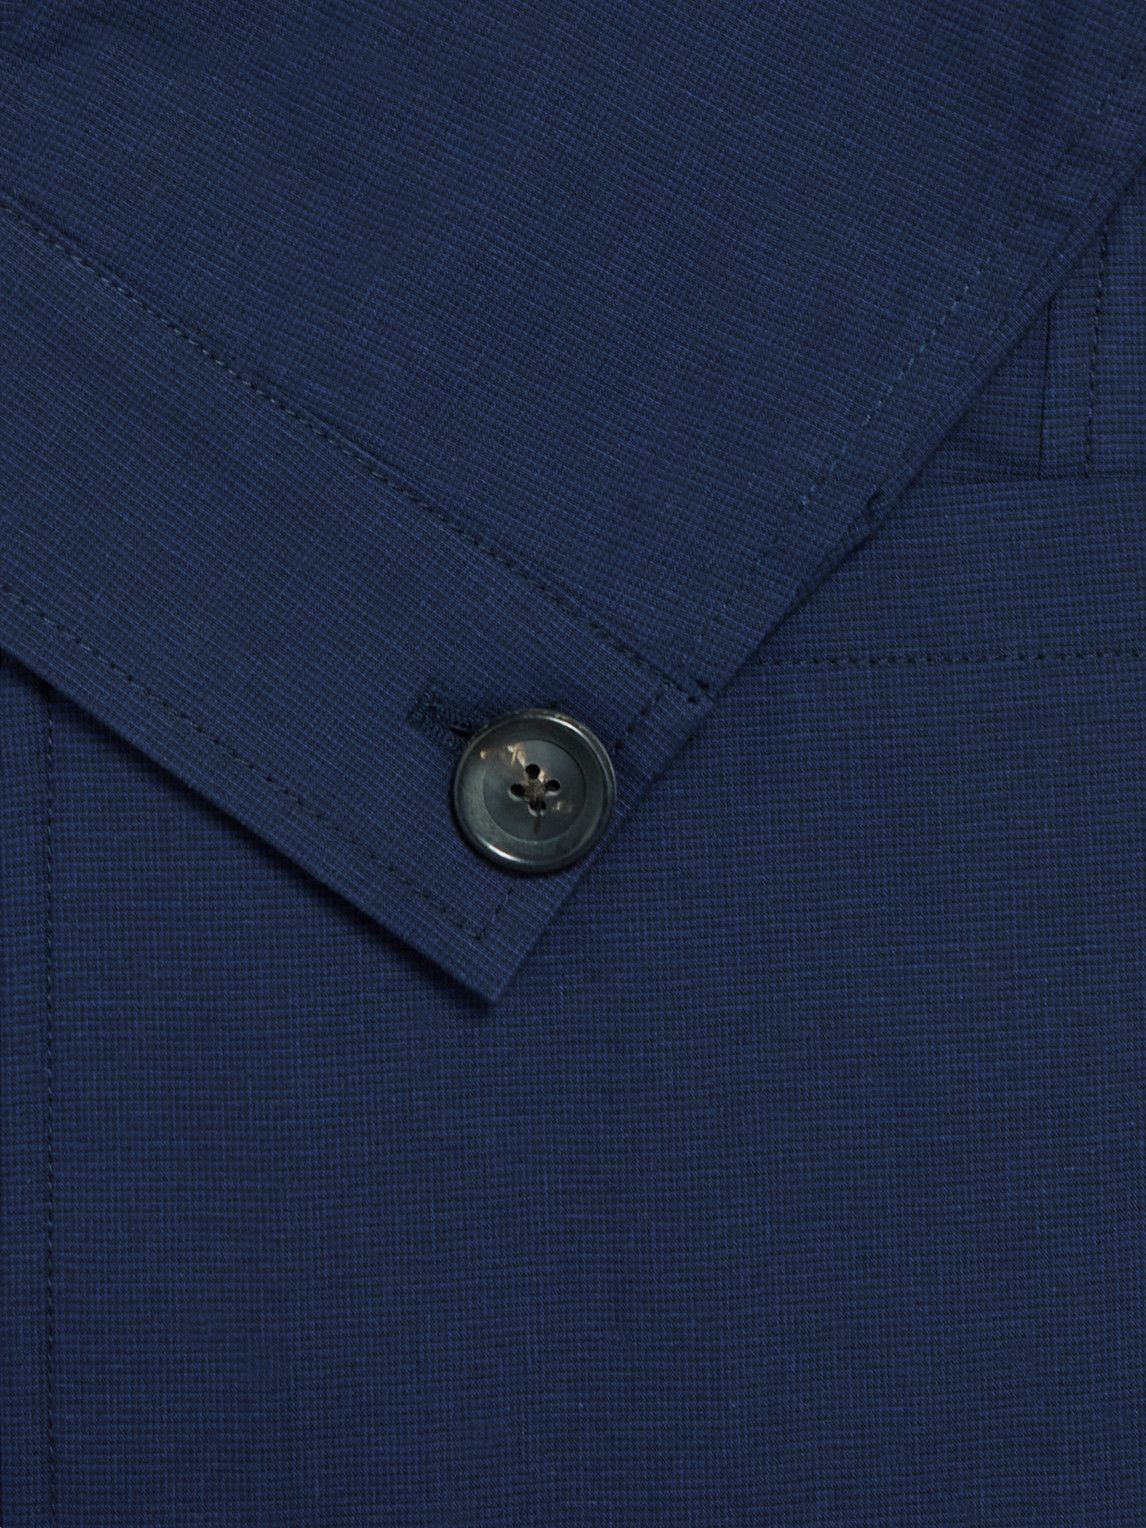 Oliver Spencer - Fairway Unstructured Cotton-Blend Suit Jacket - Blue